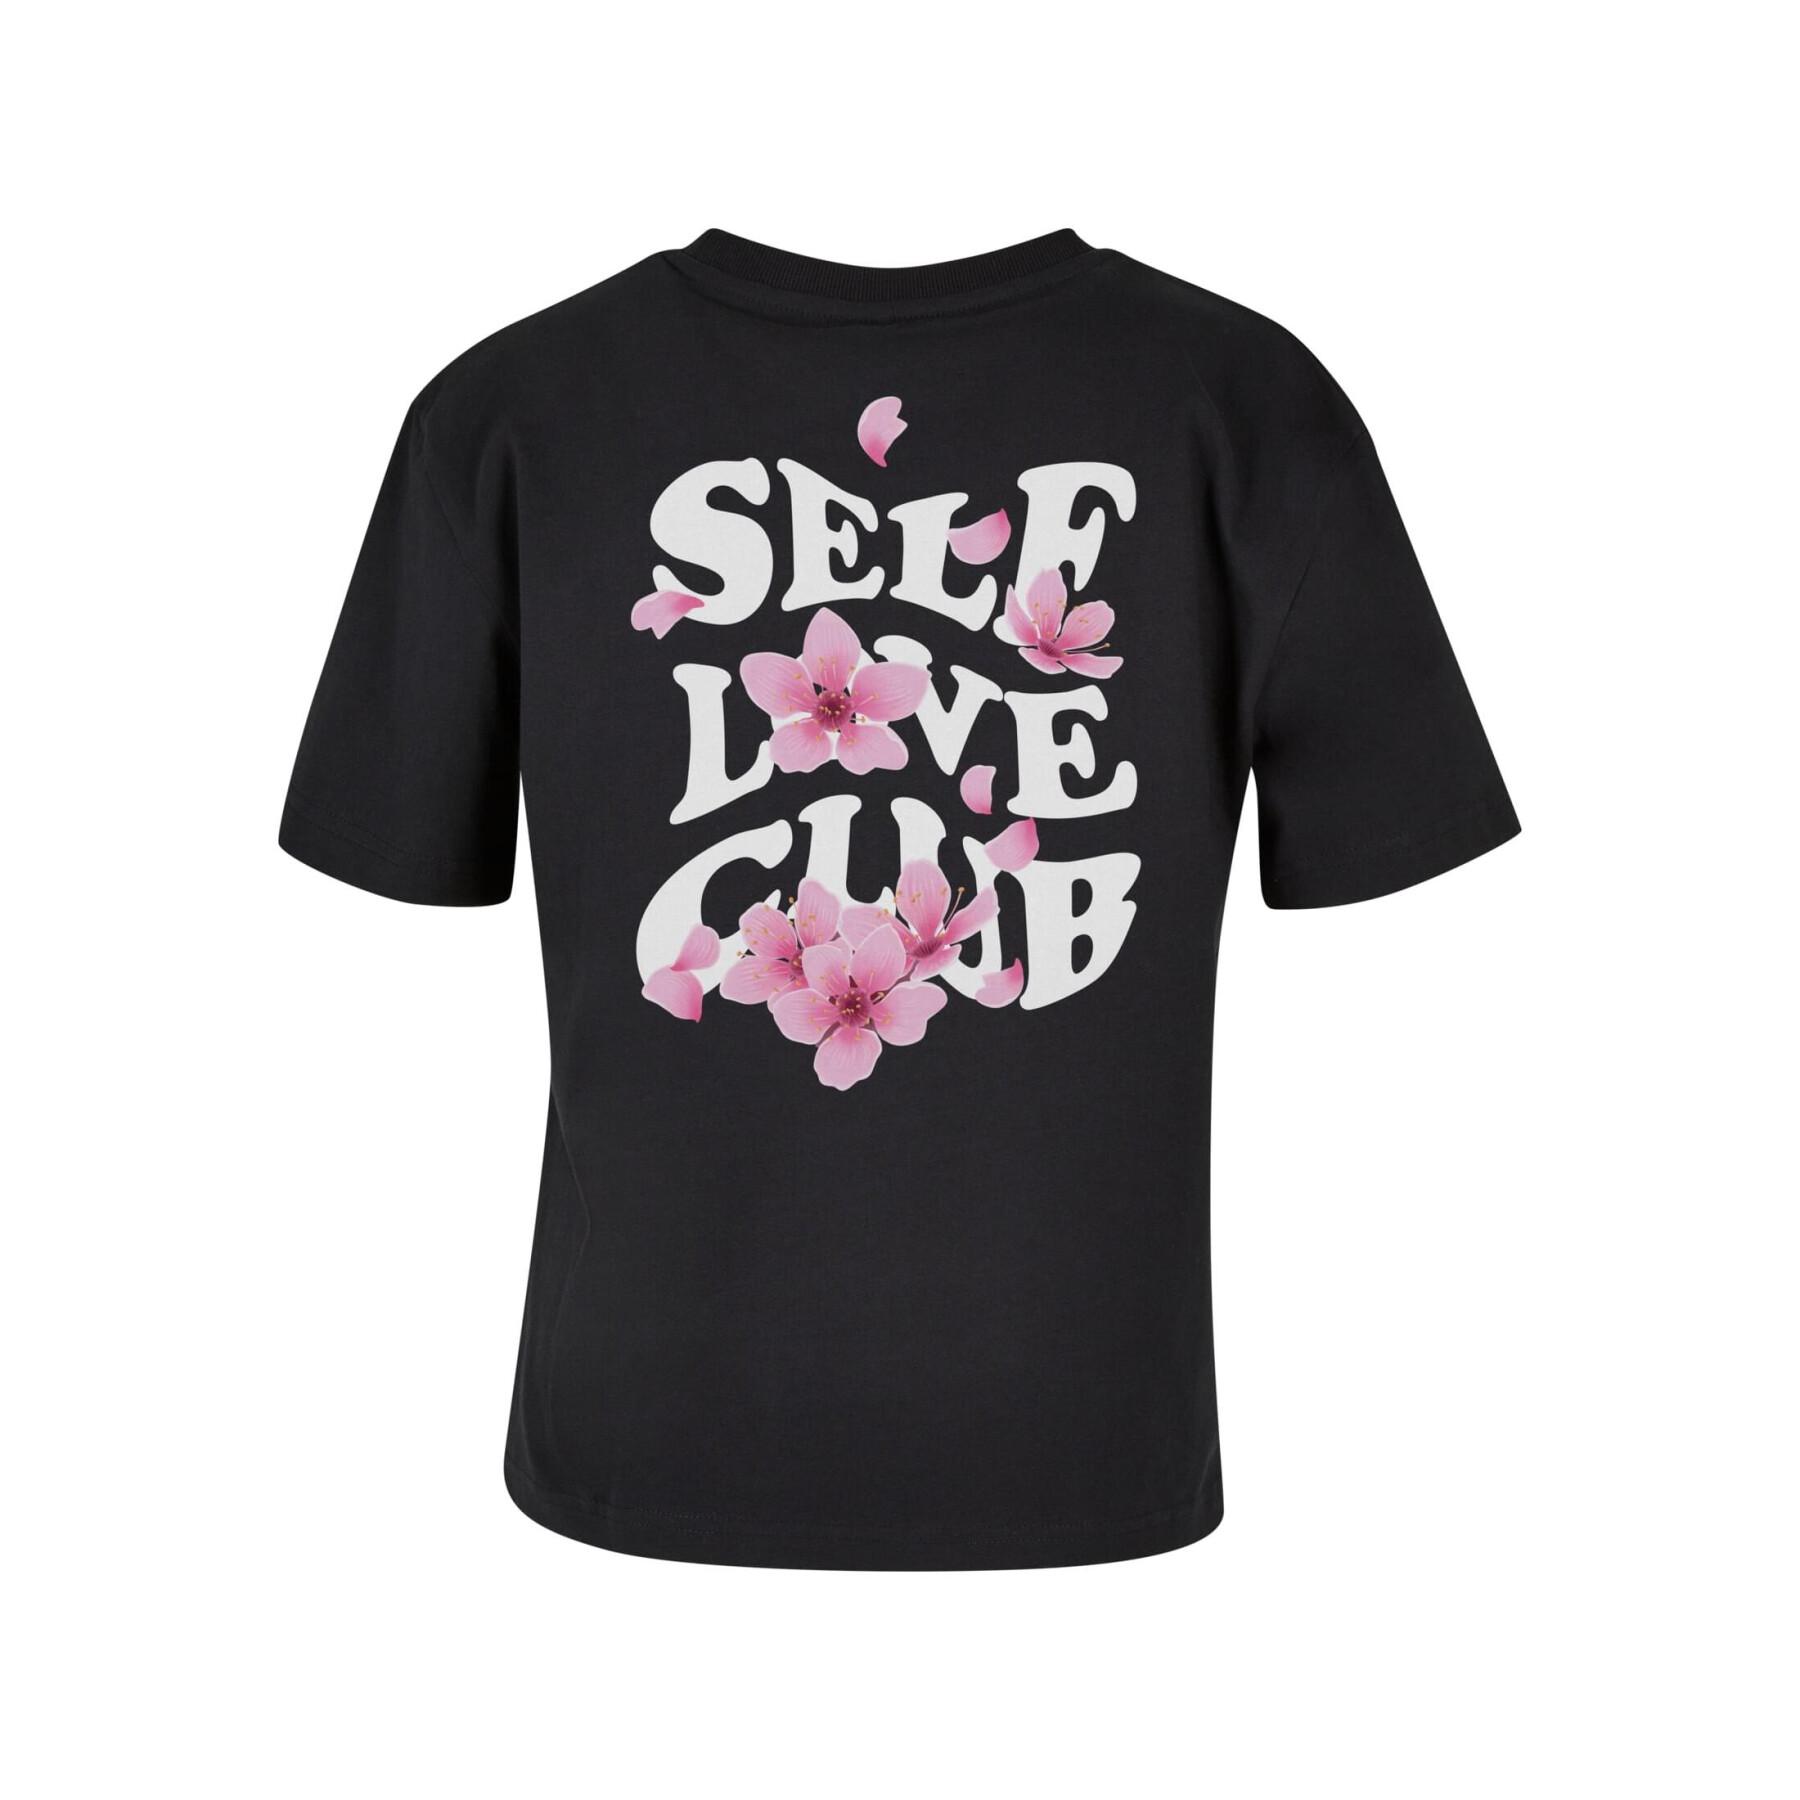 Women's T-shirt Mister Tee Self Love Club